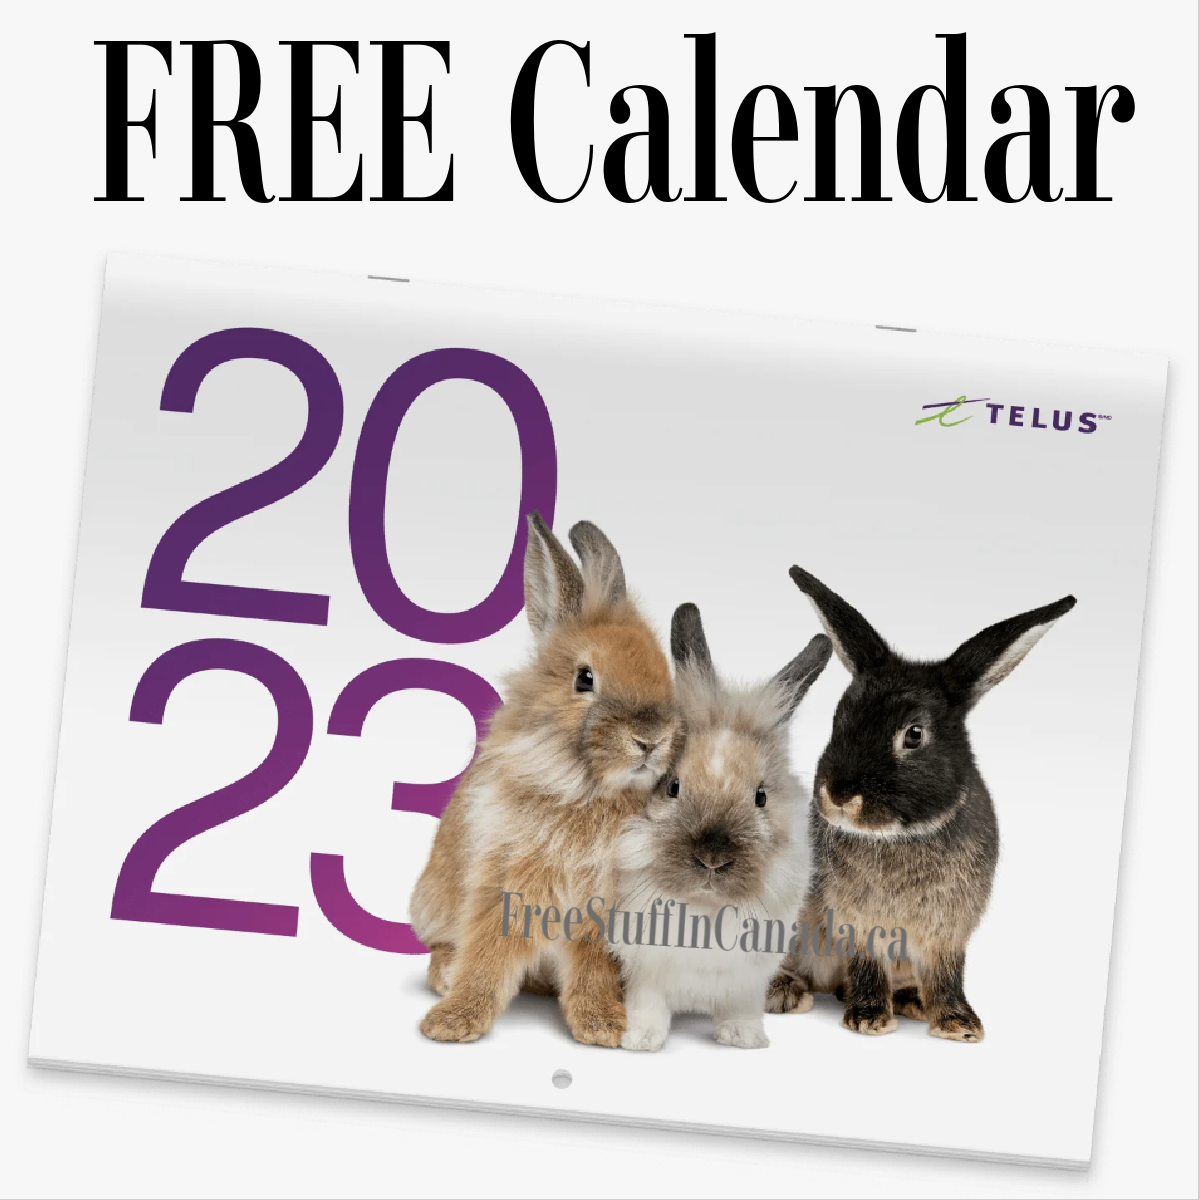 free-2023-telus-calendar-free-stuff-in-canada